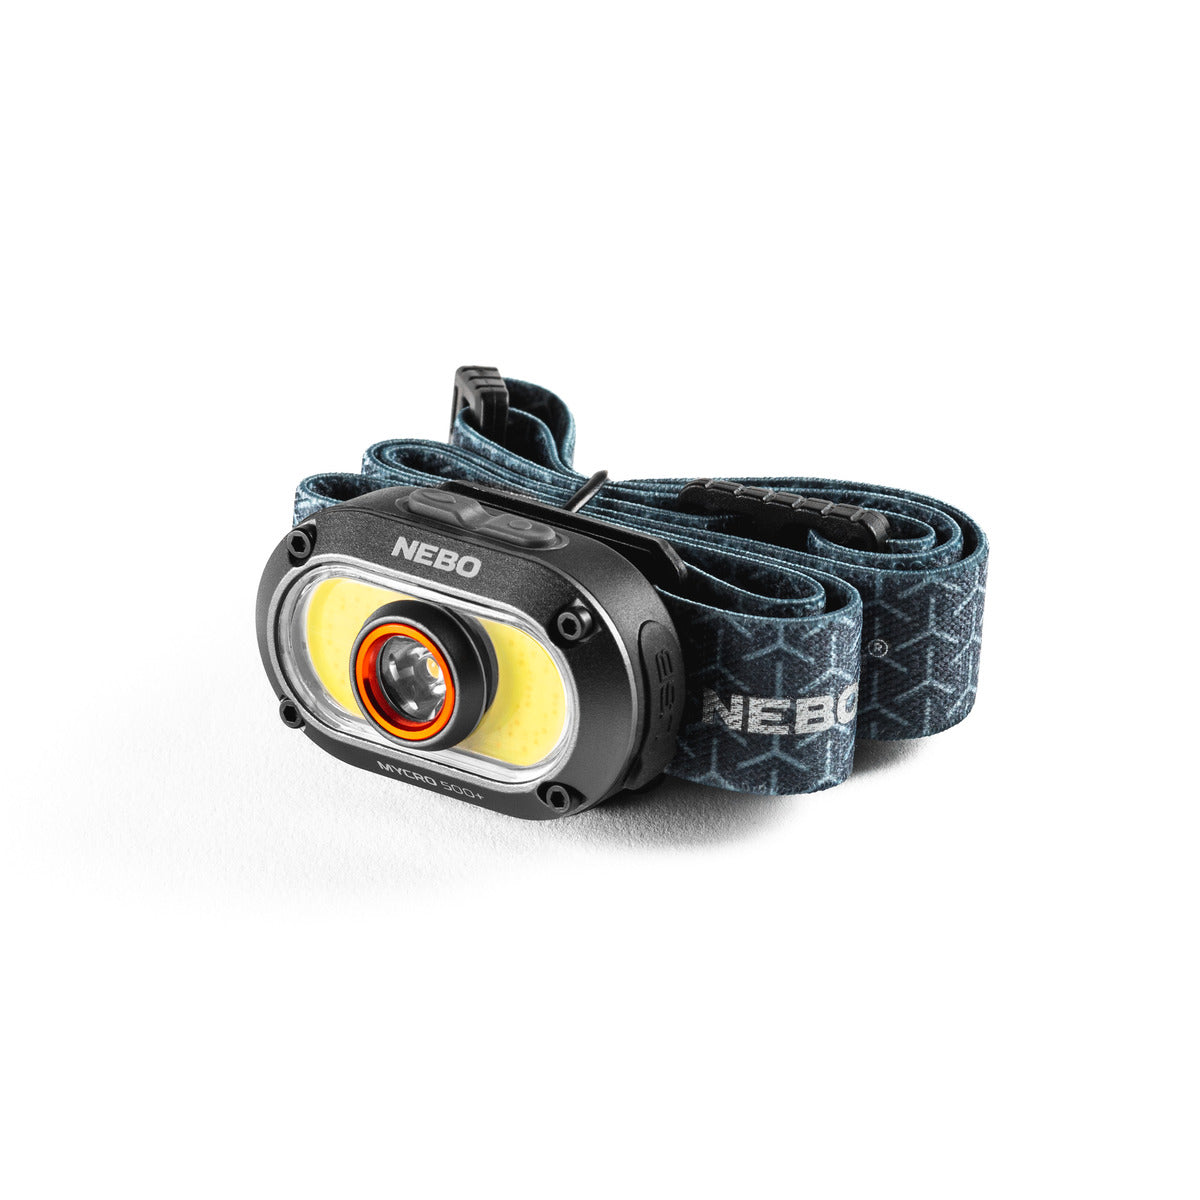 NEBO Headlamp and Cap Light with 500 Lumen Turbo Mode